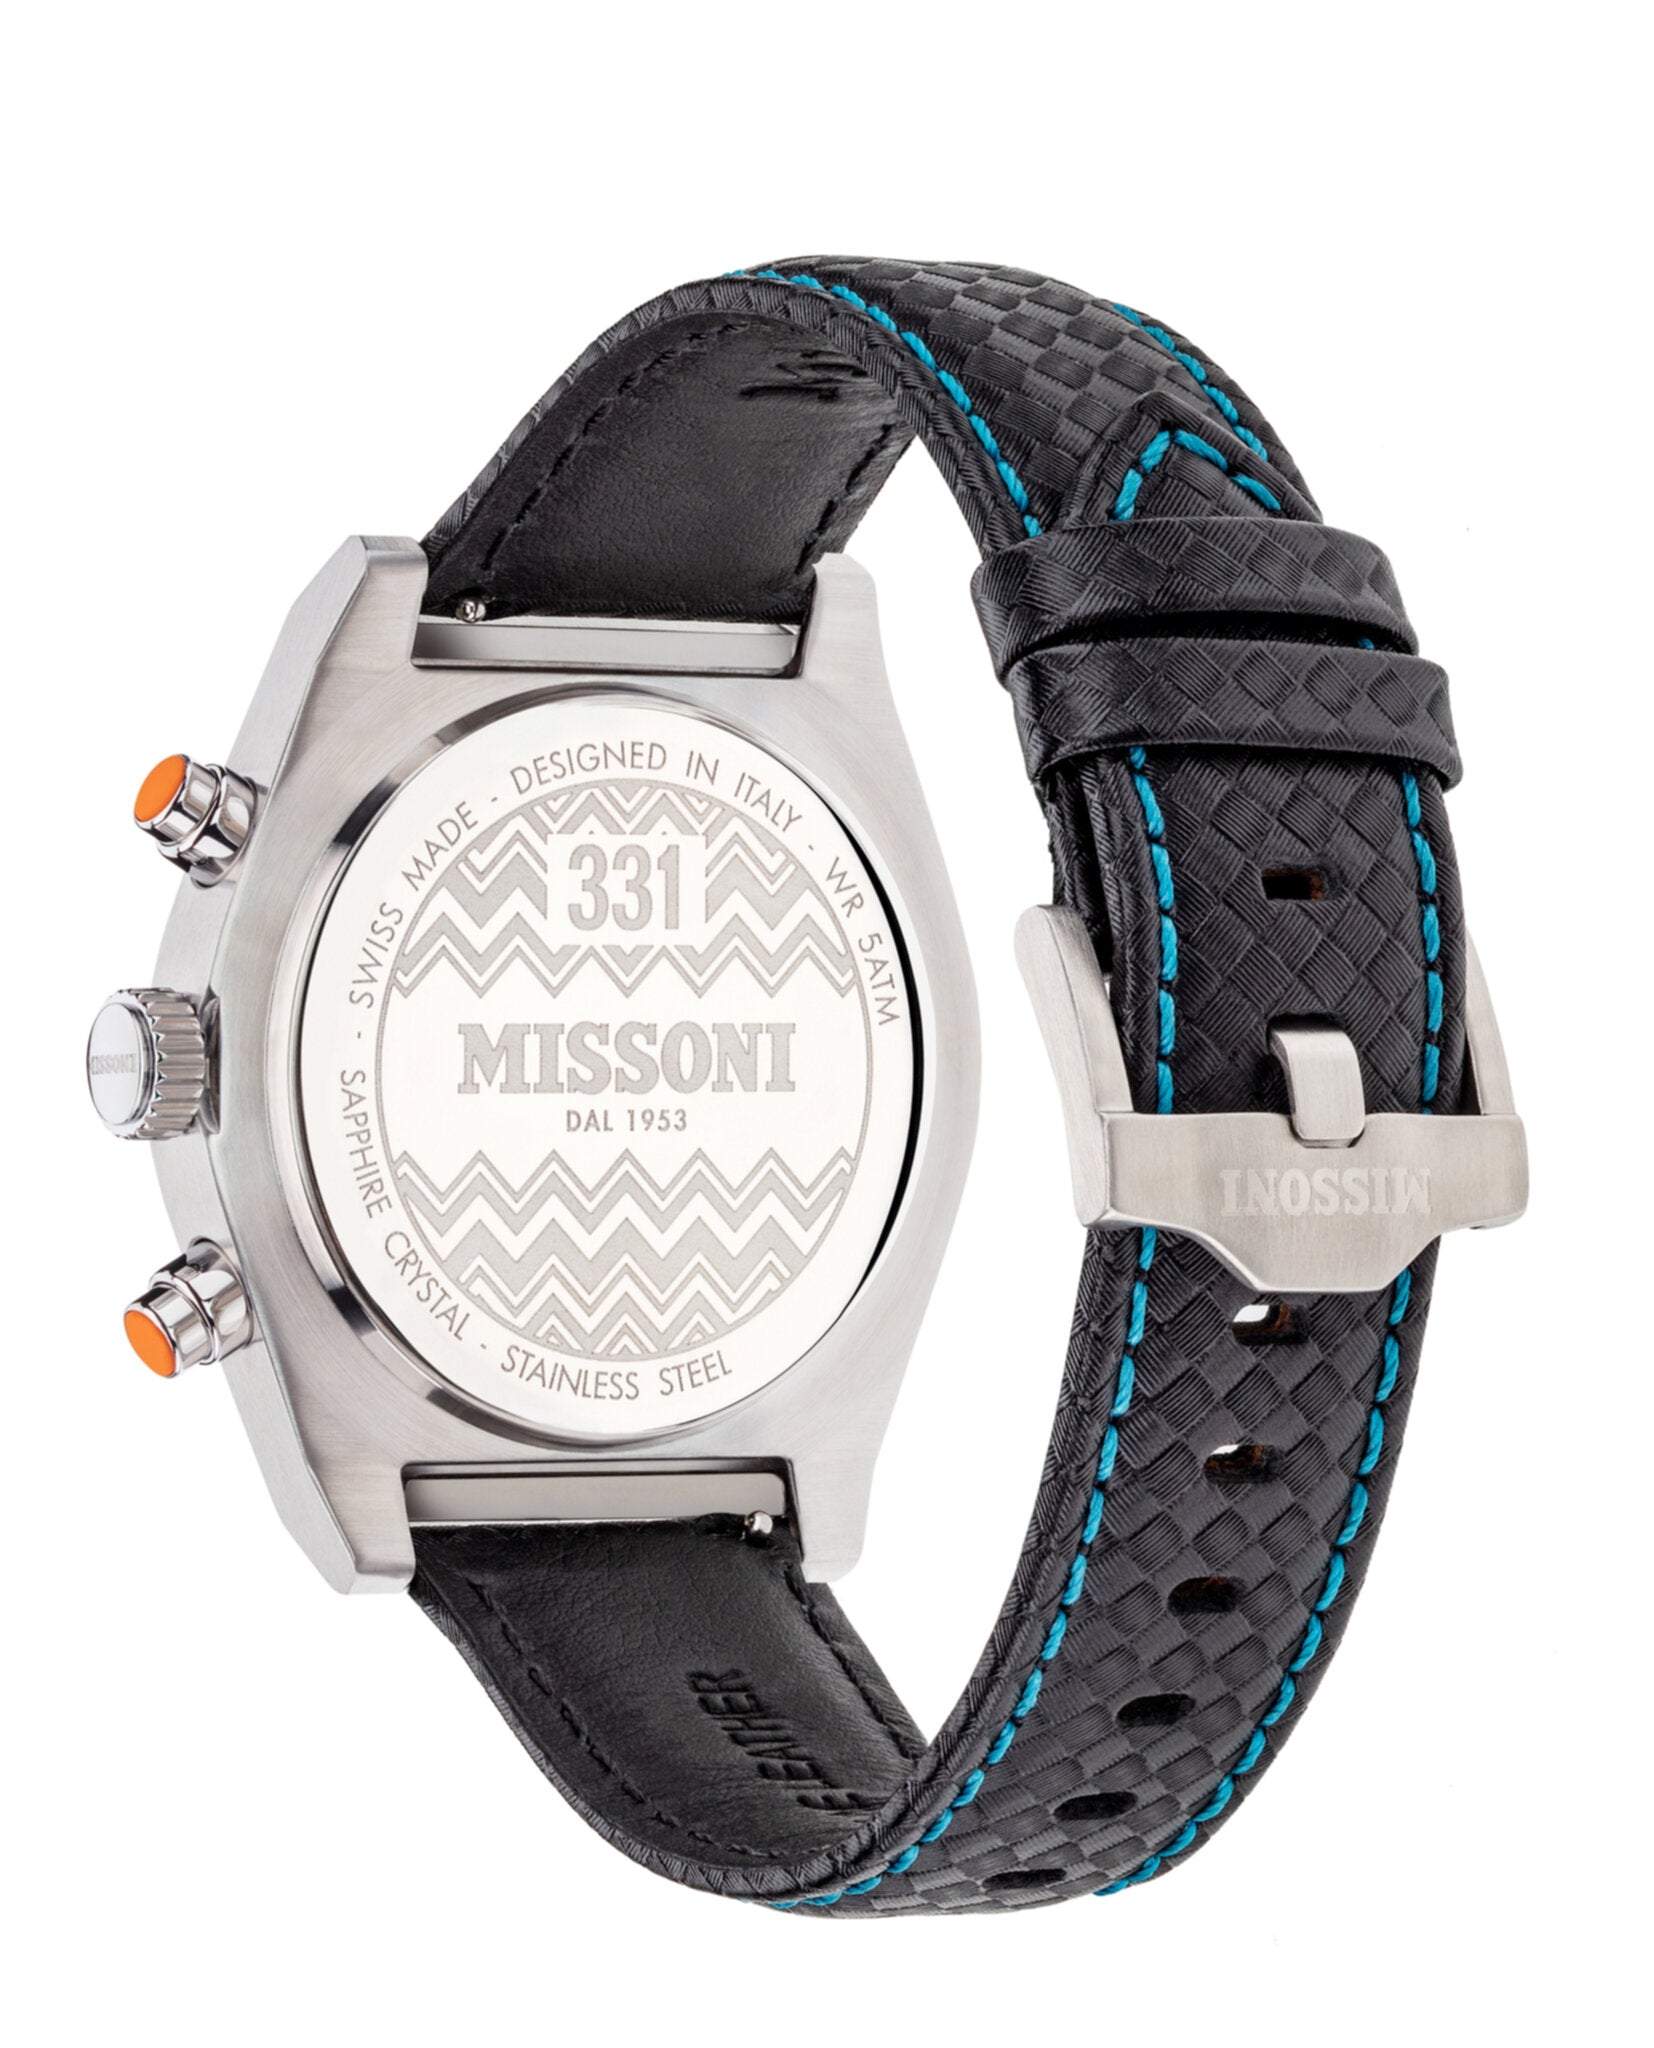 Missoni 331 Active Chronograph Watch